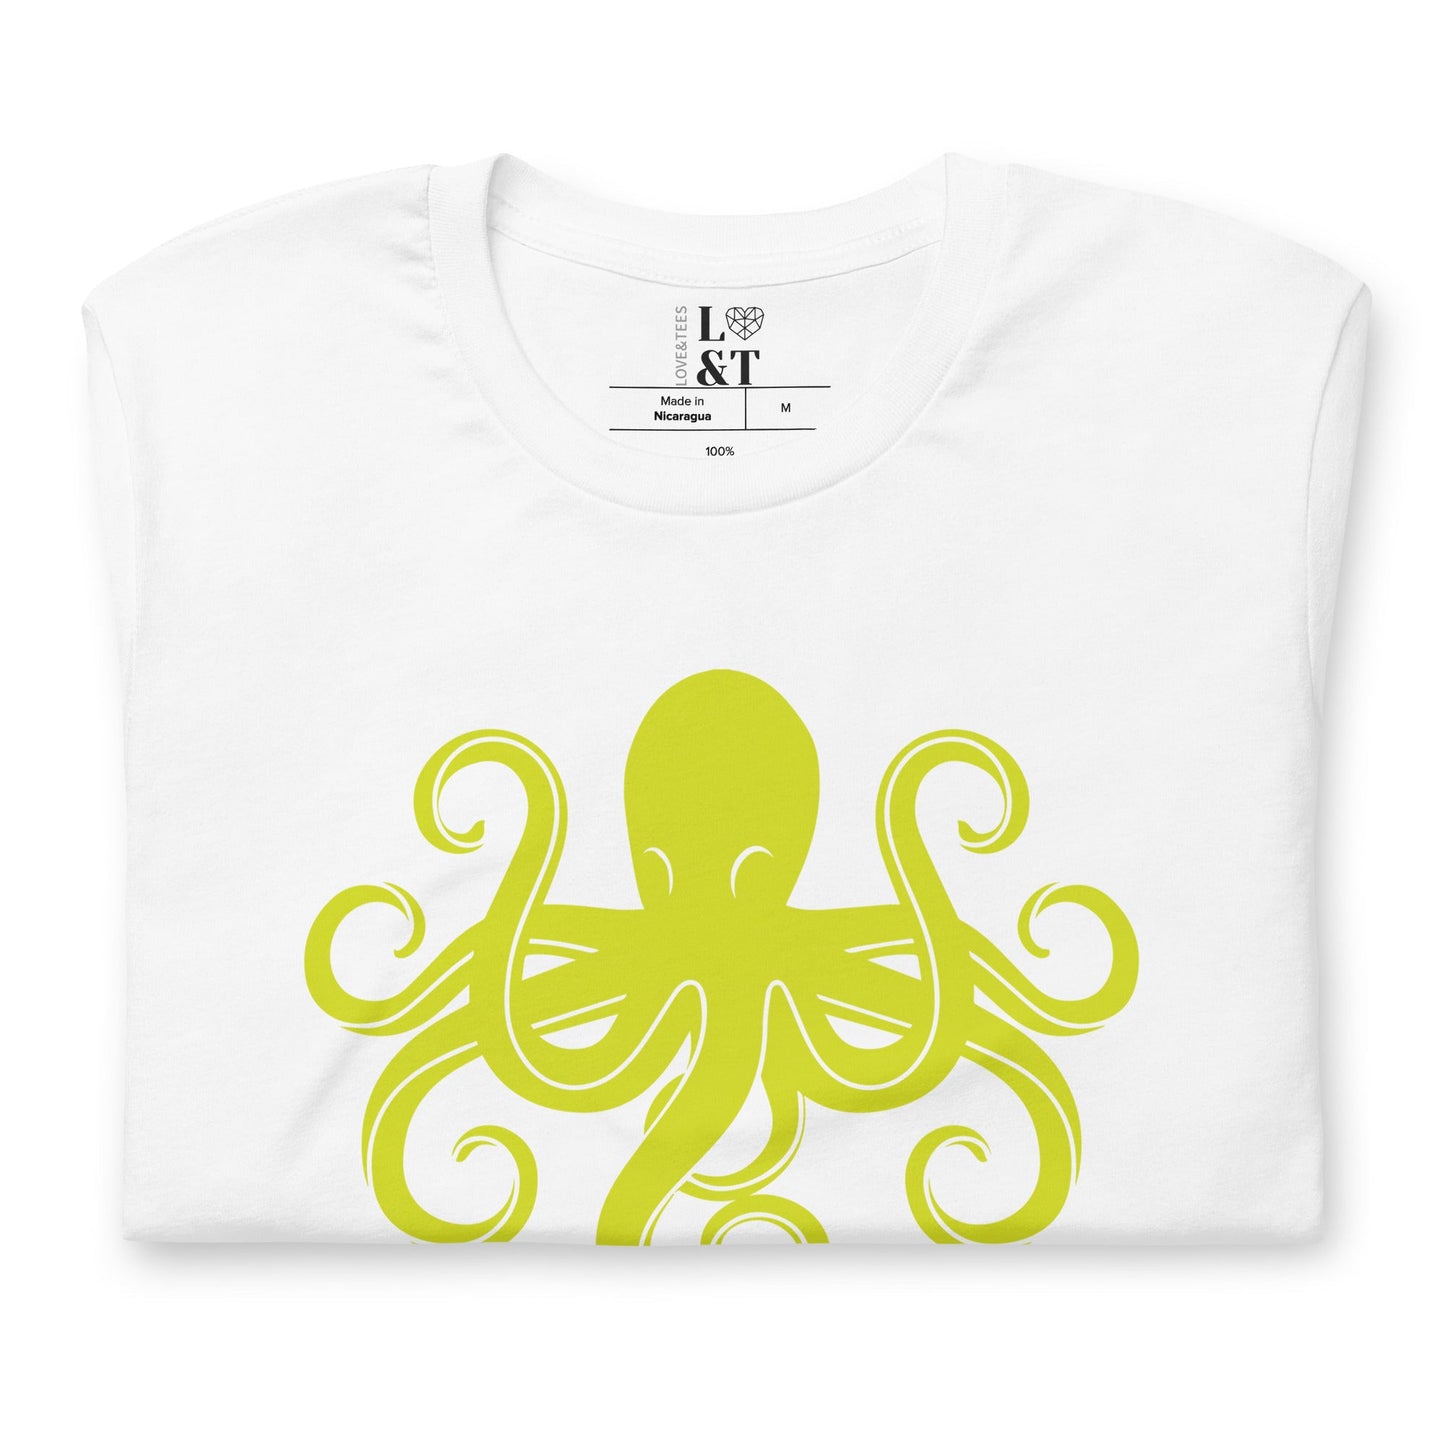 Octopus Unisex T-Shirt - Love&Tees